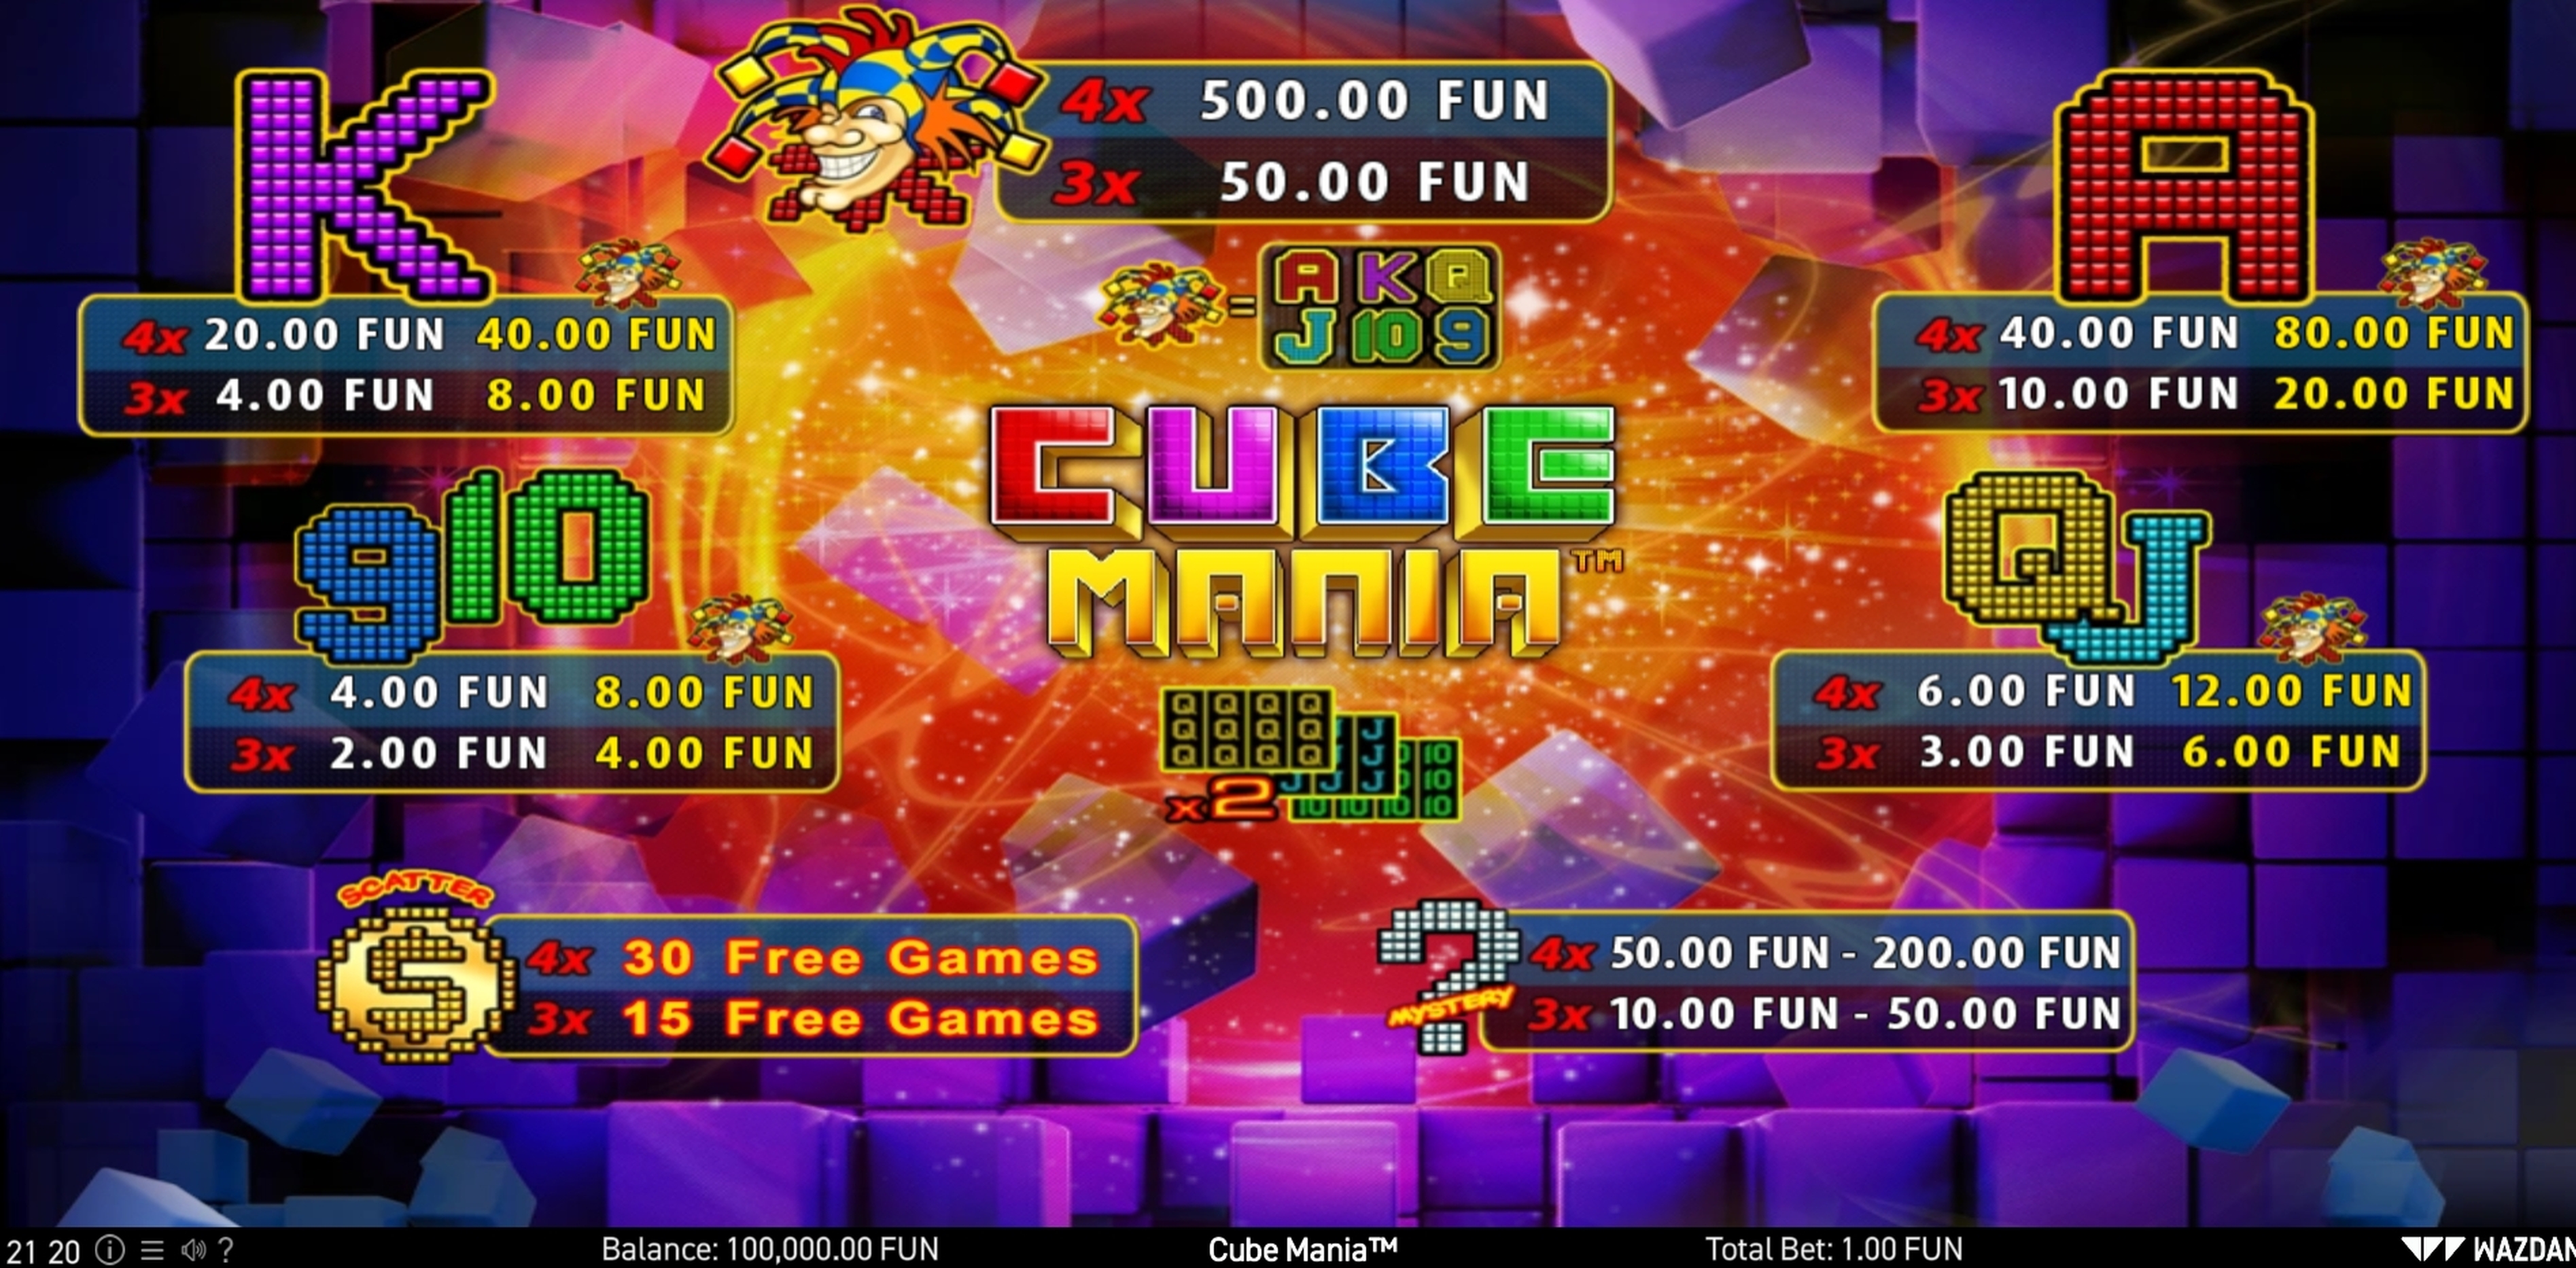 Info of Cube Mania Slot Game by Wazdan